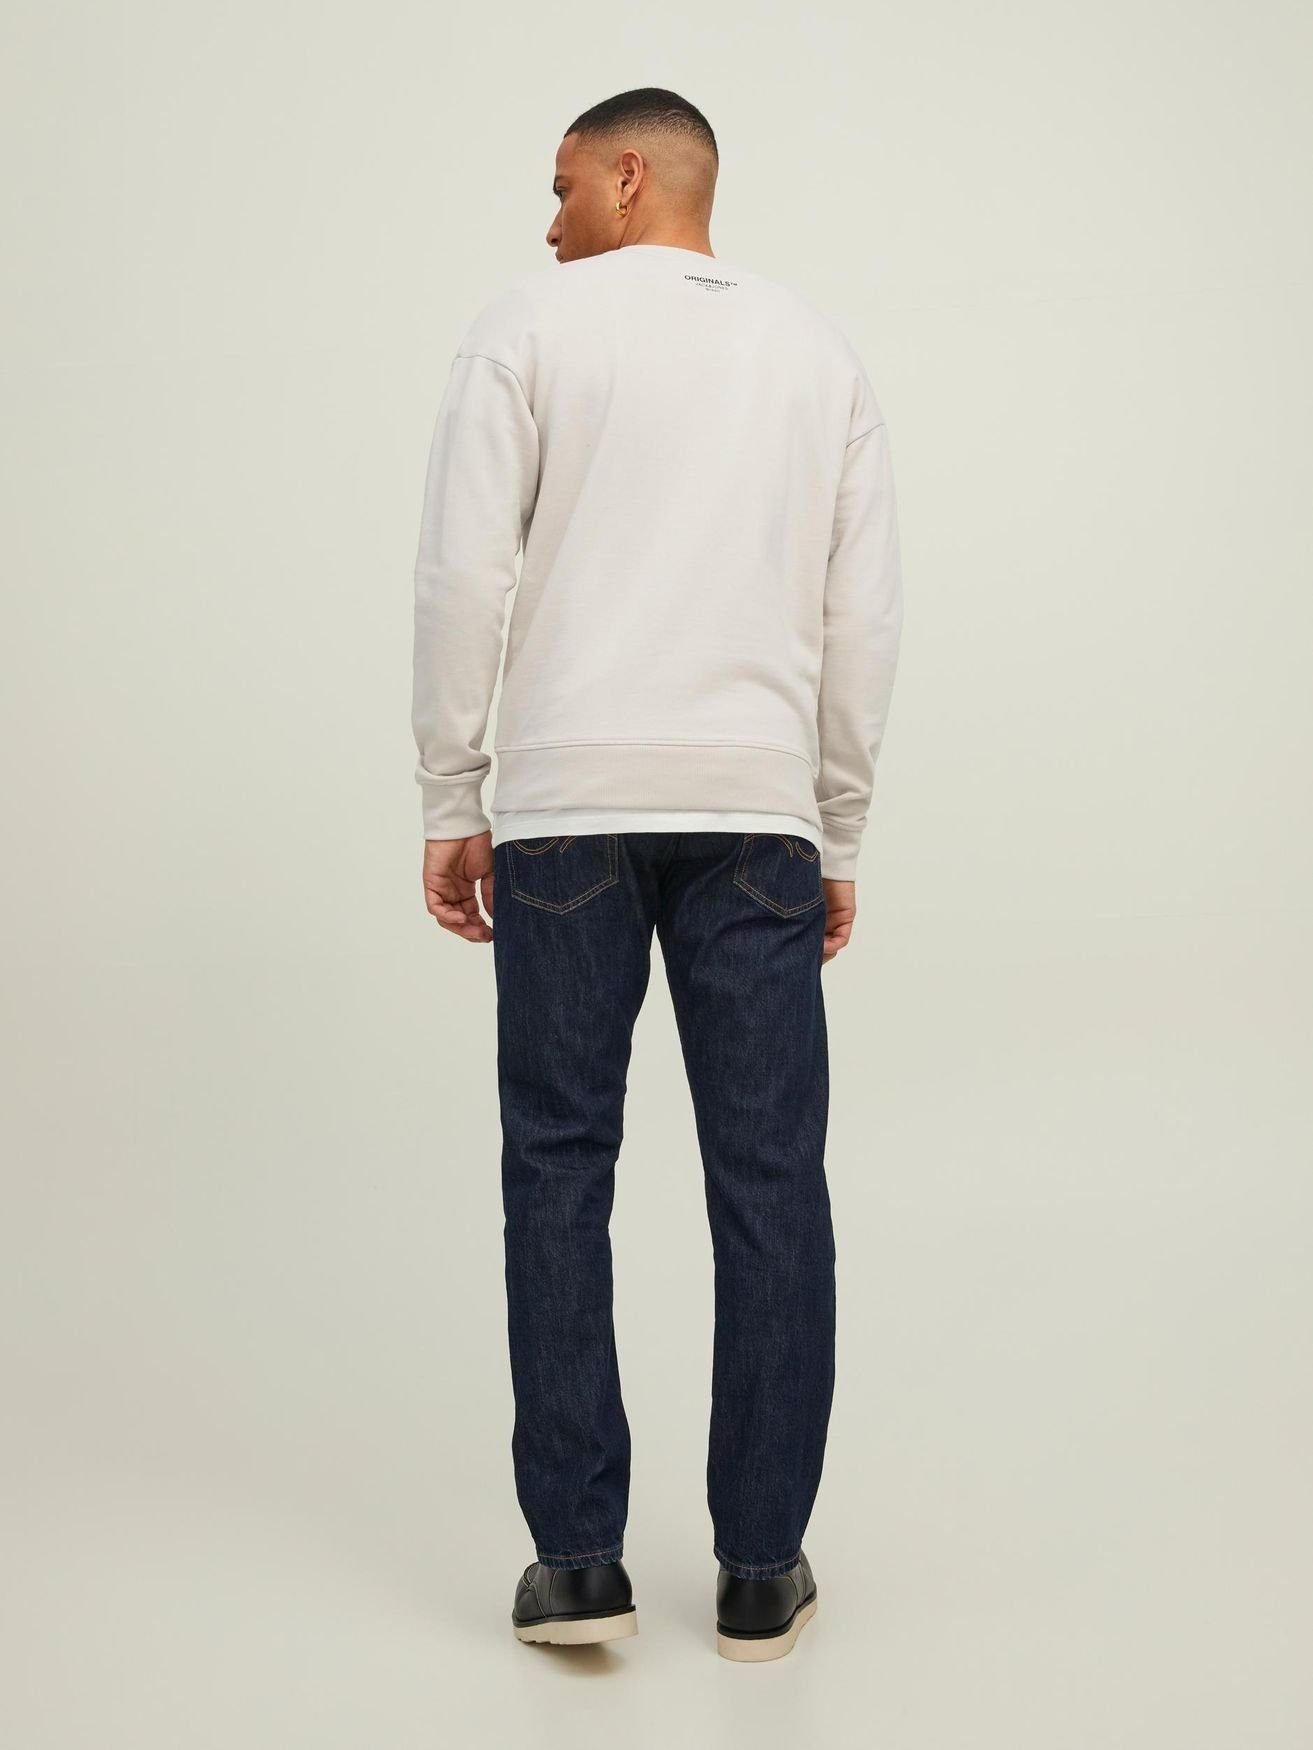 Sweater Langarm Sand Rundhals in Sweatshirt Jack & Jones Basic Pullover Shirt JORCLEAN 4672